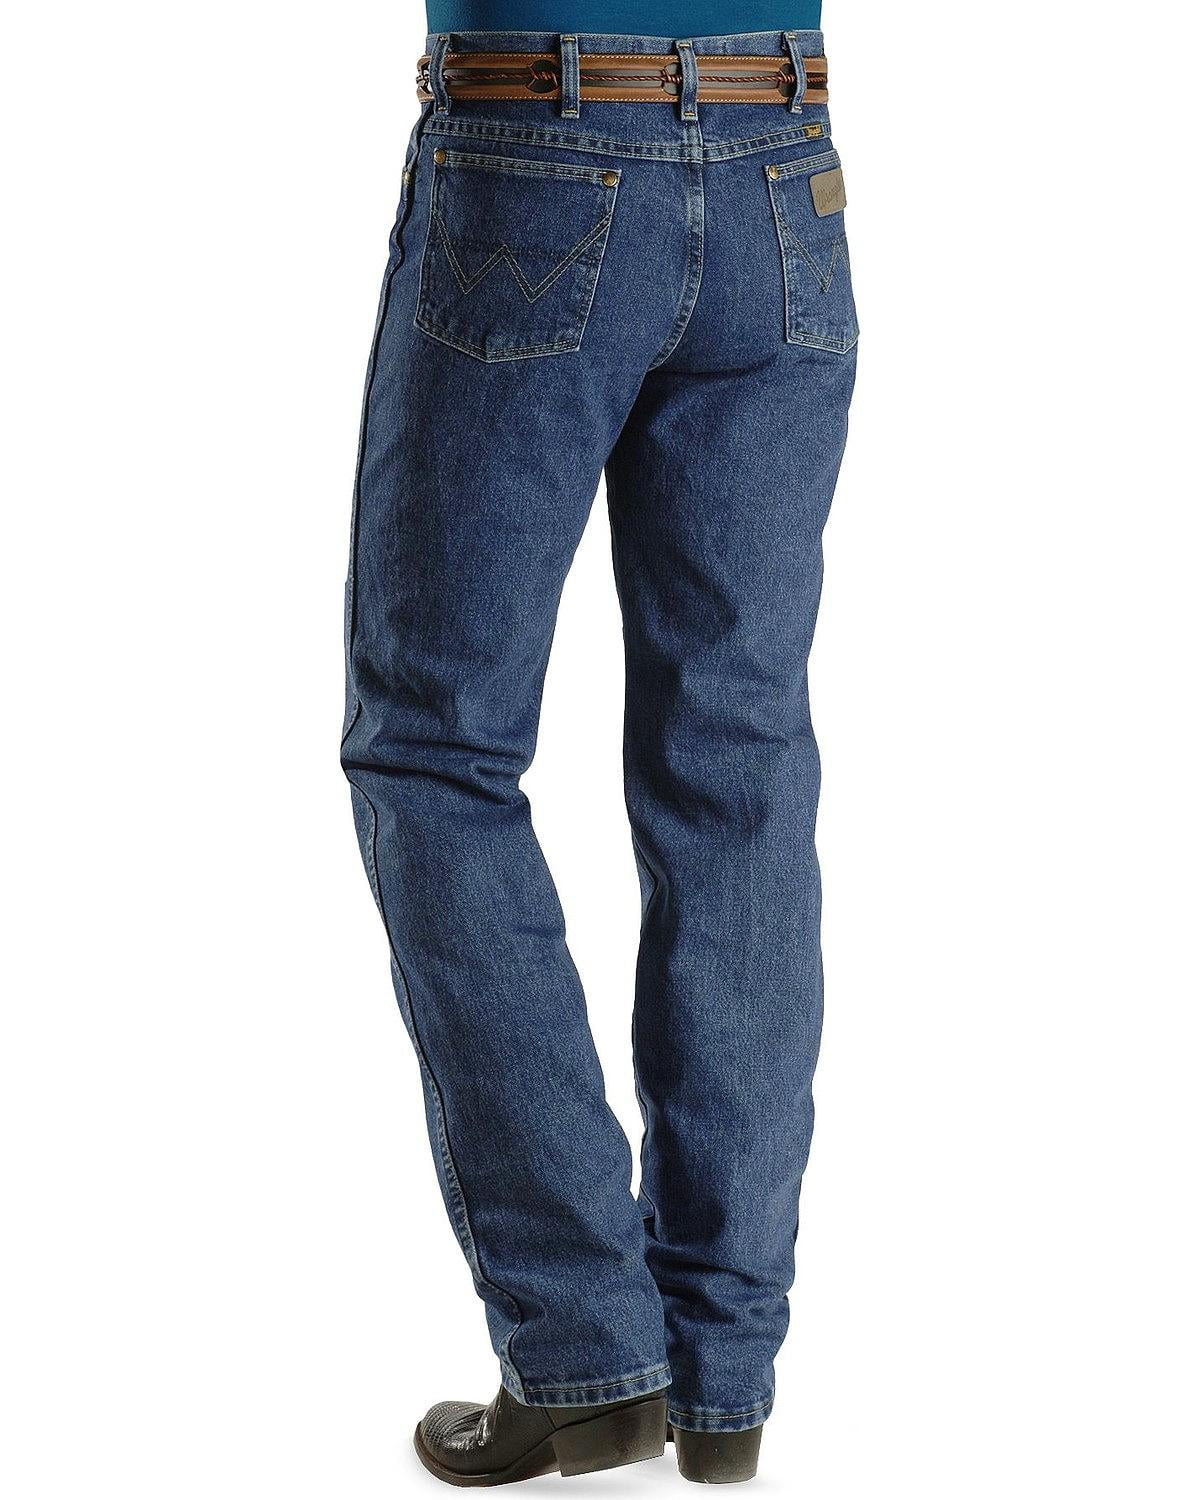 wrangler jeans george strait 936 slim